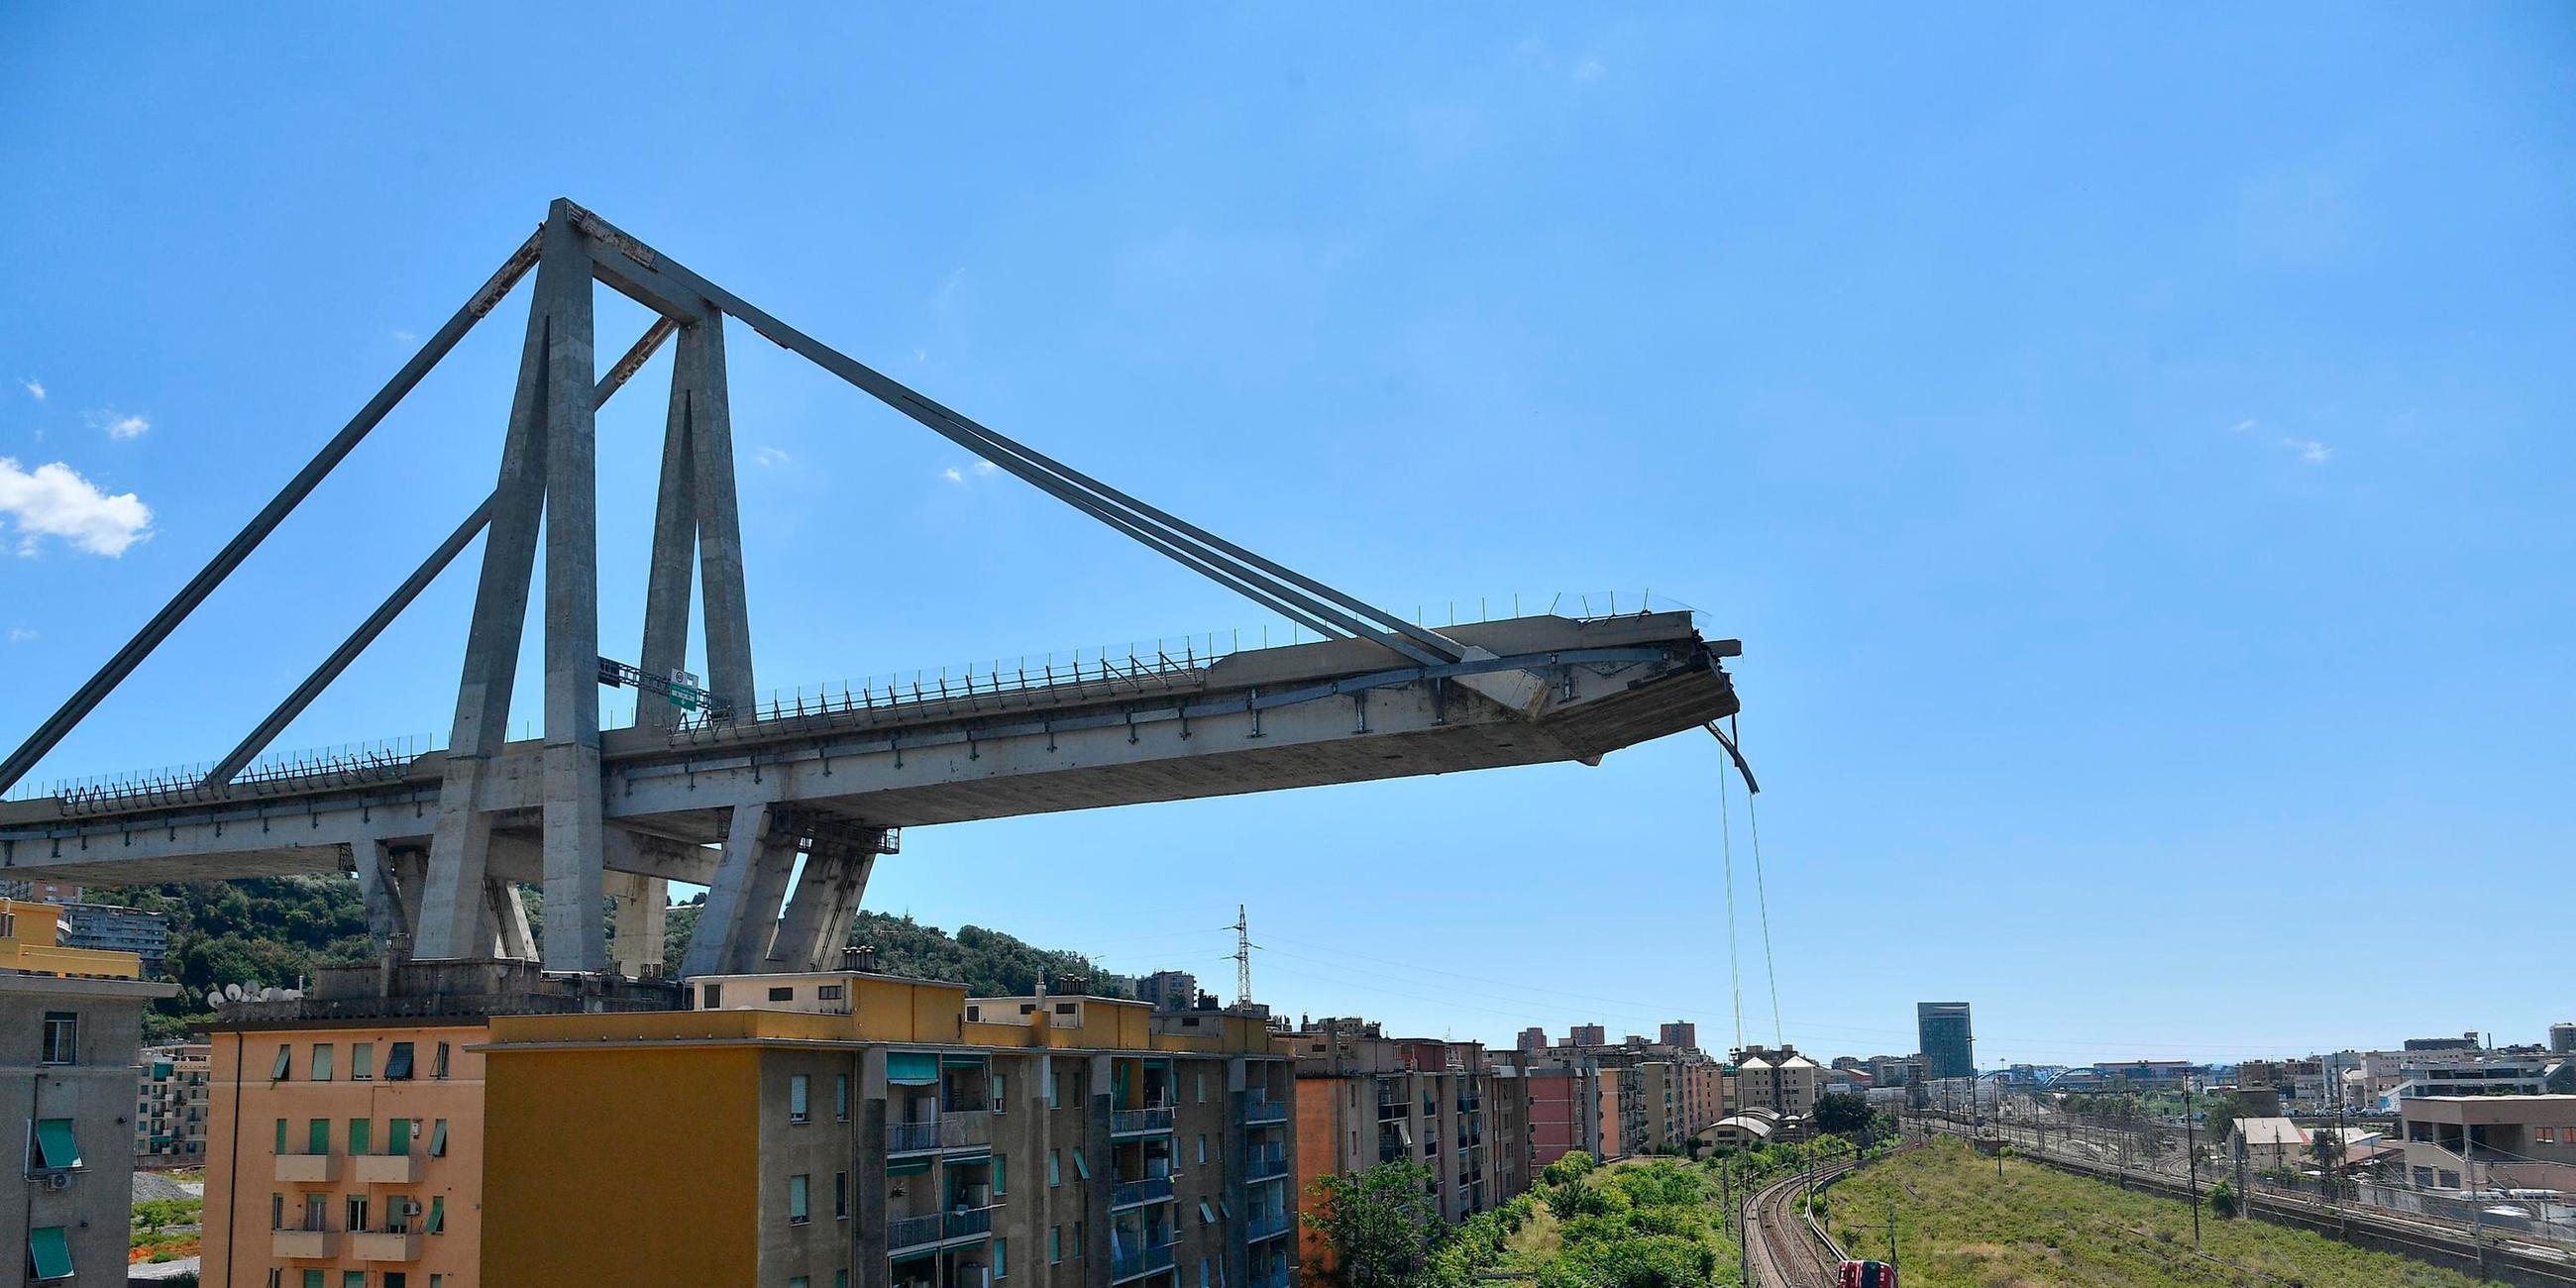 Eingestürzte Brücke des Architekten Riccardo Morandi in Genua am15.8.2018